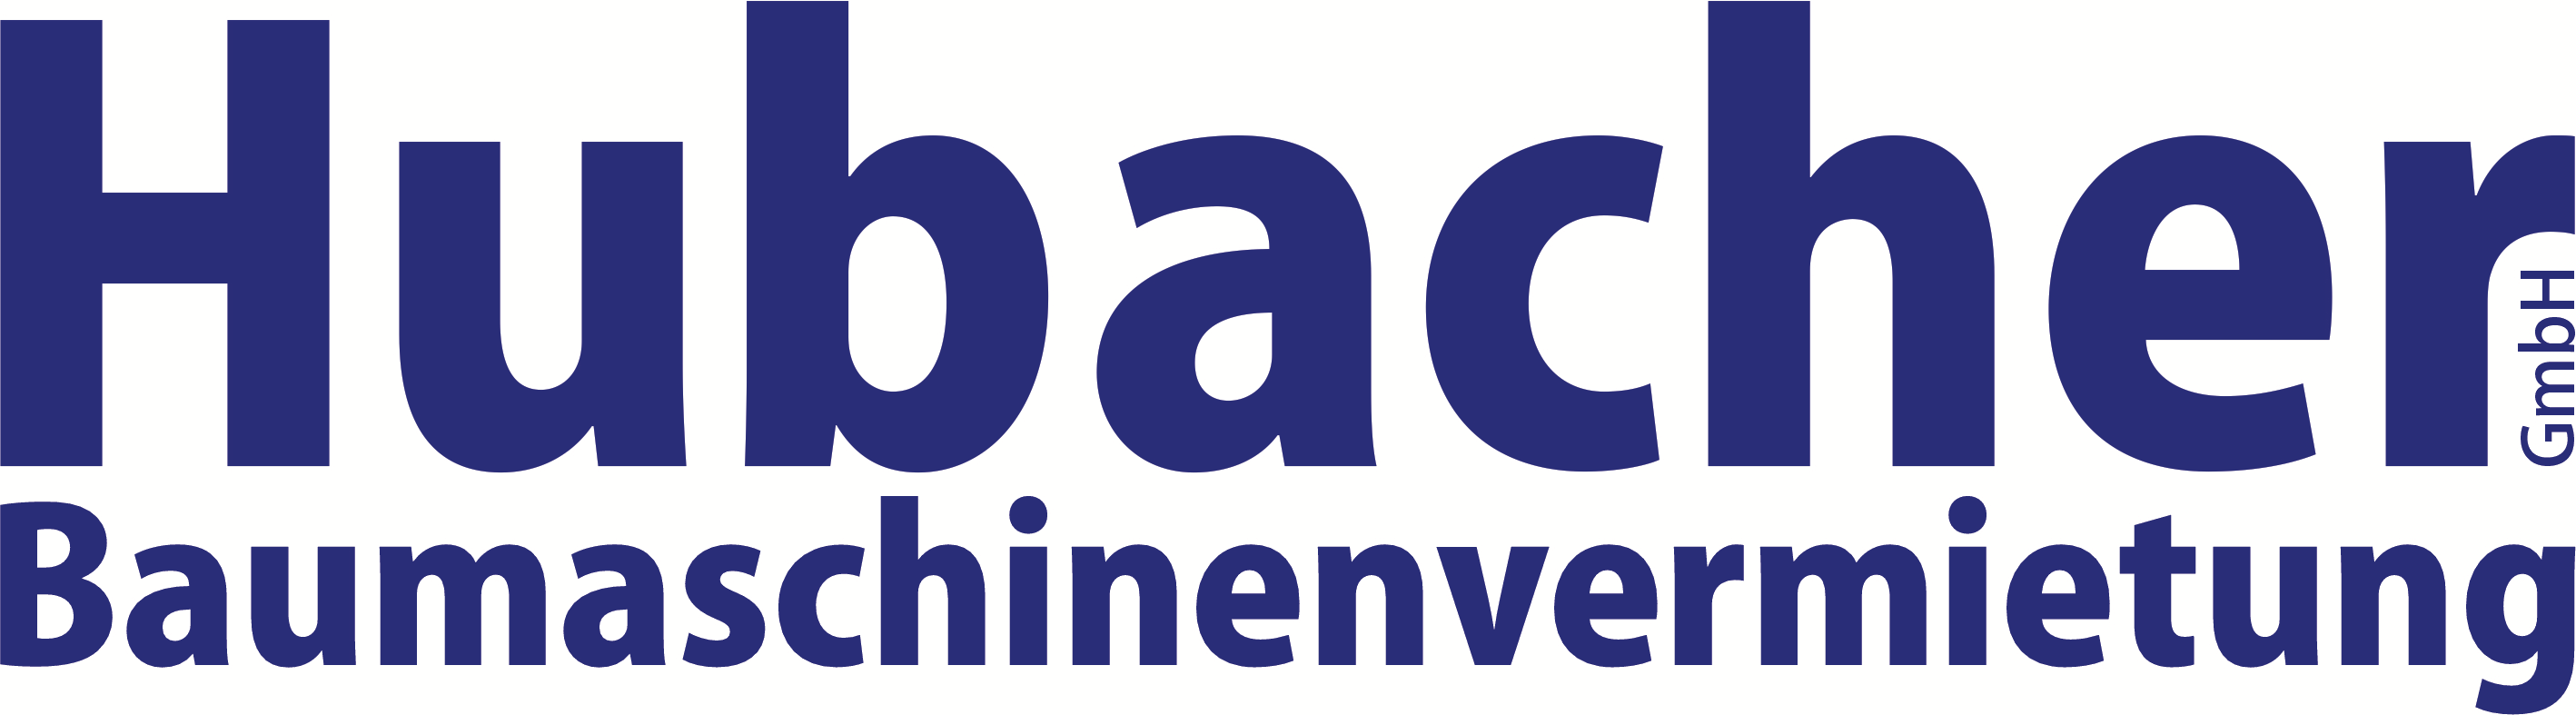 Logo-blau.png